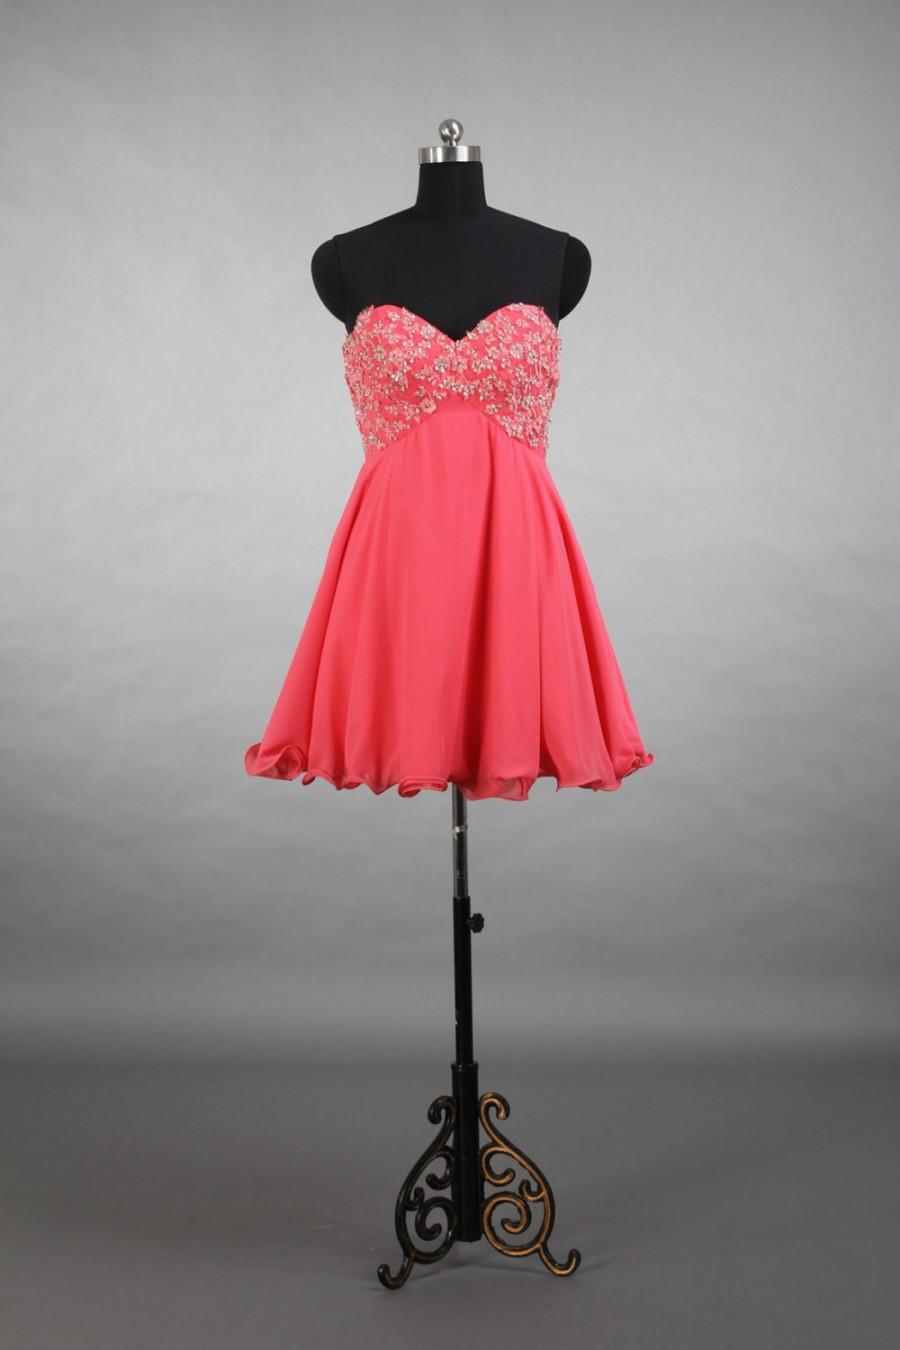 زفاف - Sweetheart Sexy Homecoming Dress, Coral Short Mint Chiffon Homecoming dress 2015, Prom Dress, Graduation Dress, Party Dress